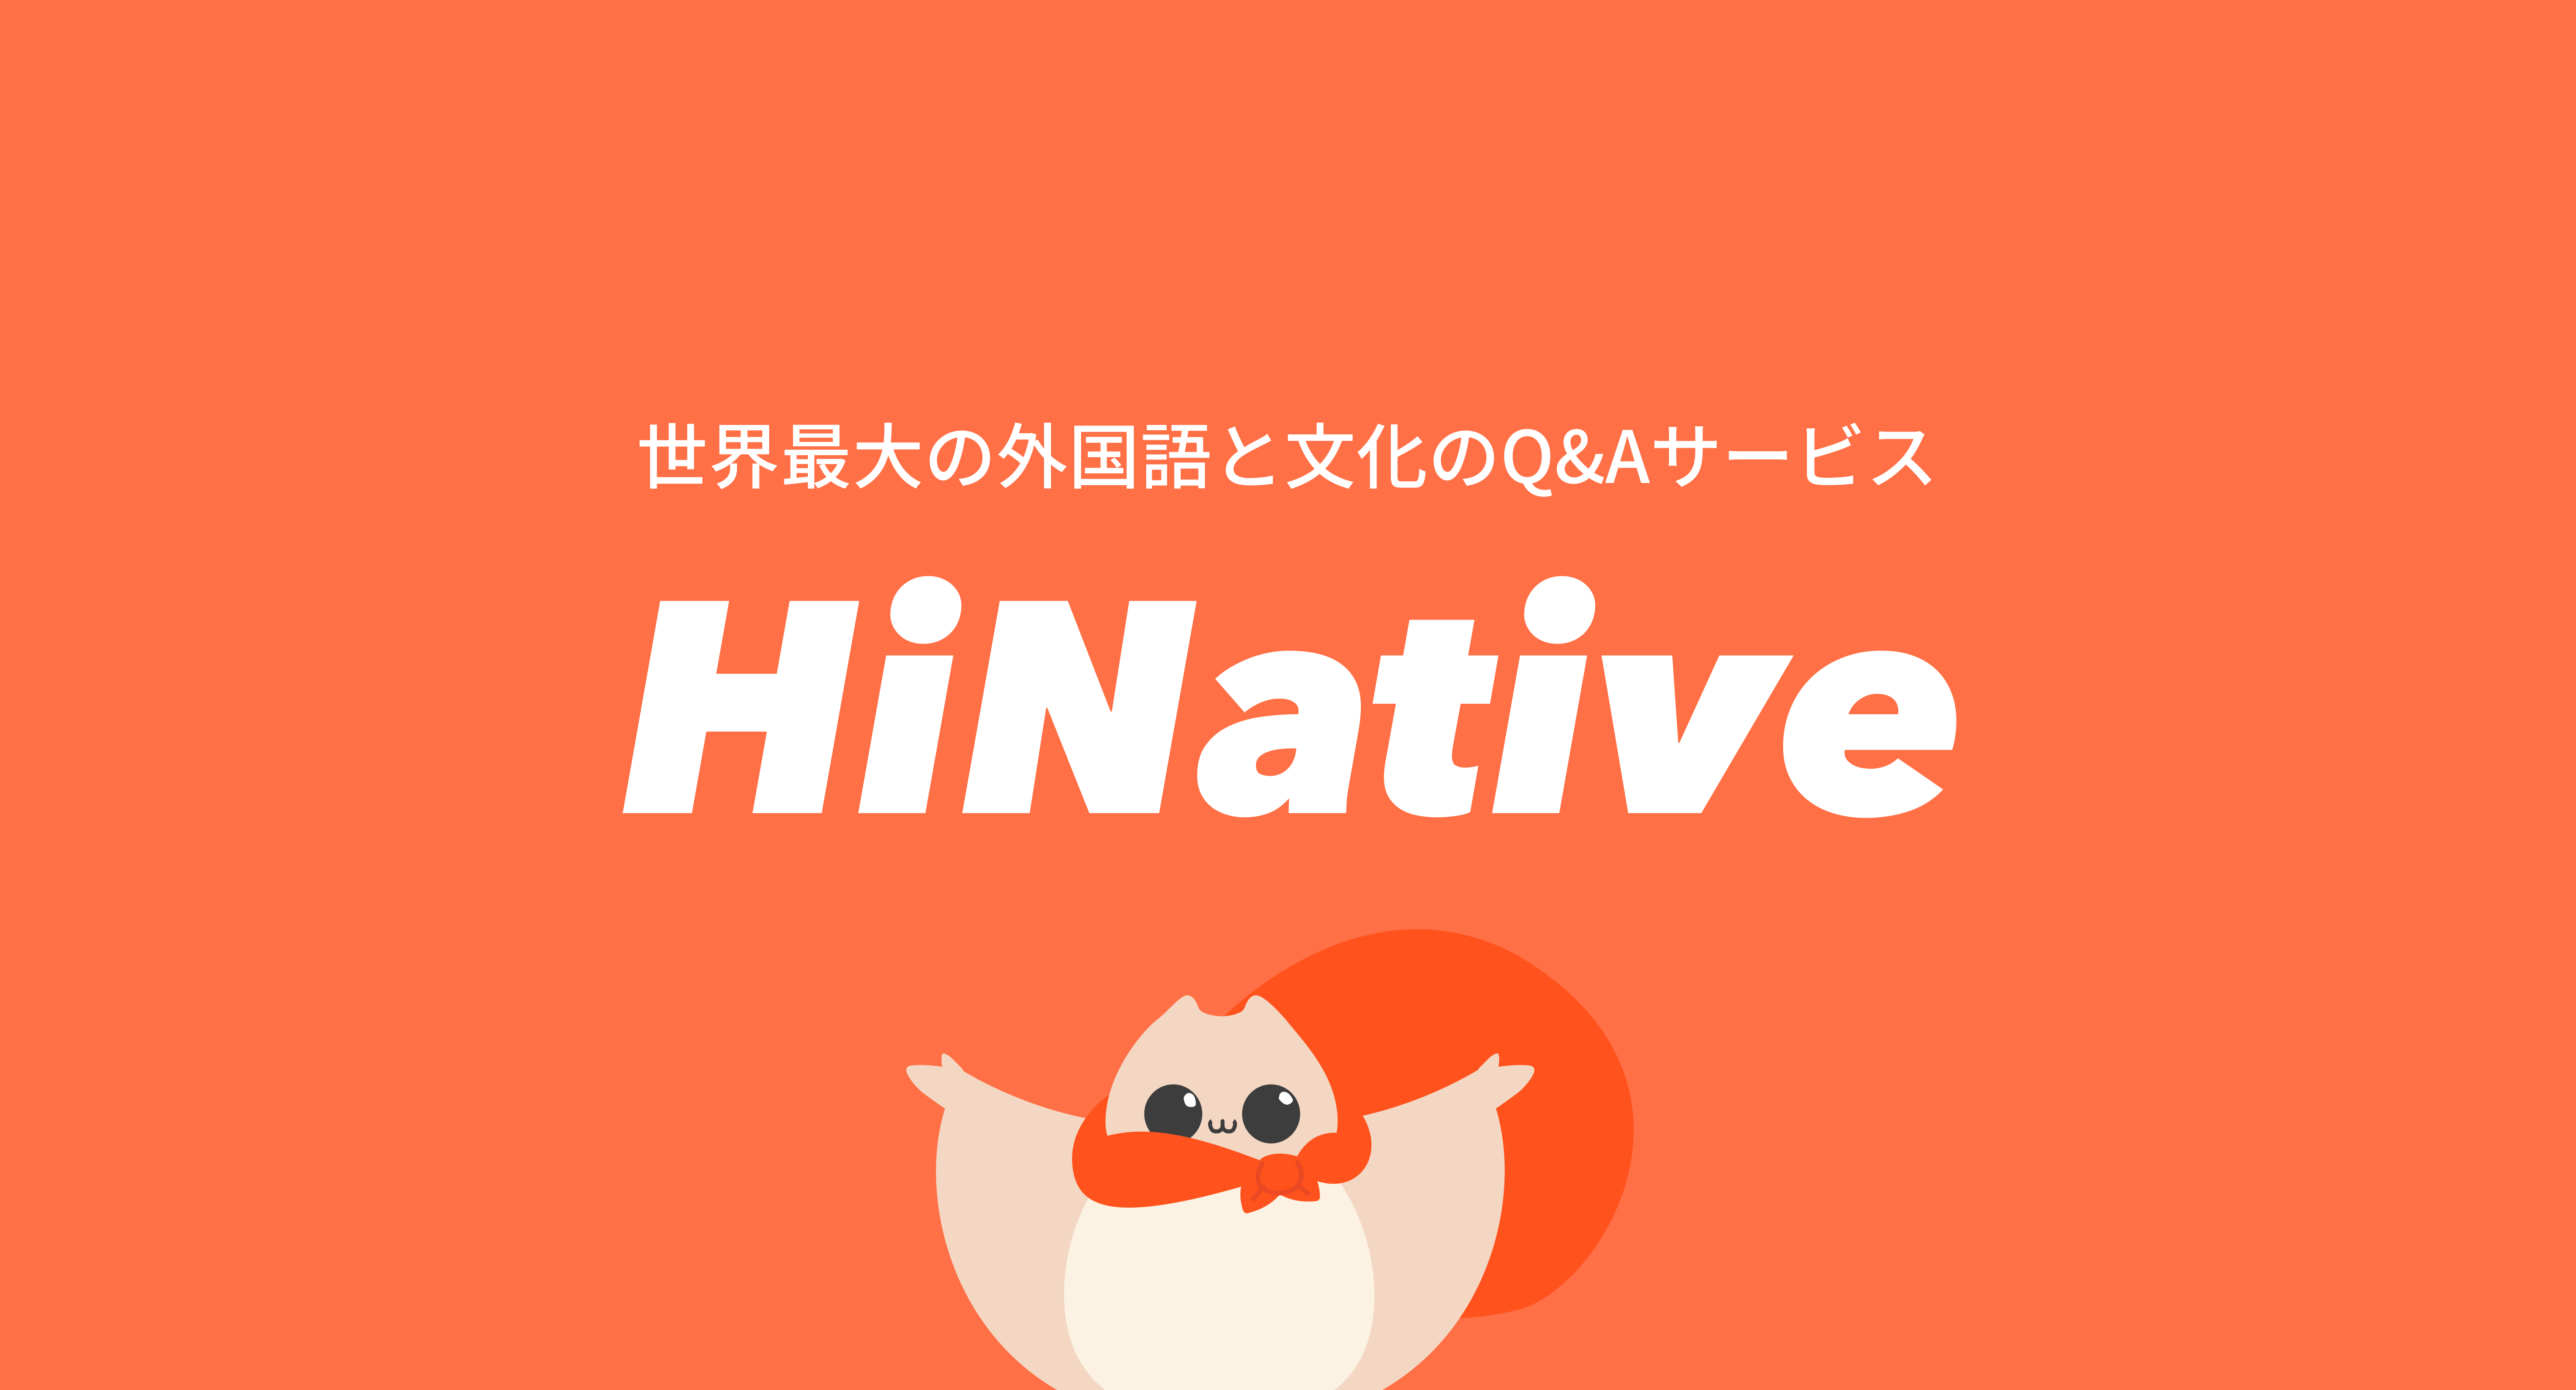 Hinative活用中 私の評判 口コミ レビュー 無料ネイティブ添削アプリ ディクトレenglish